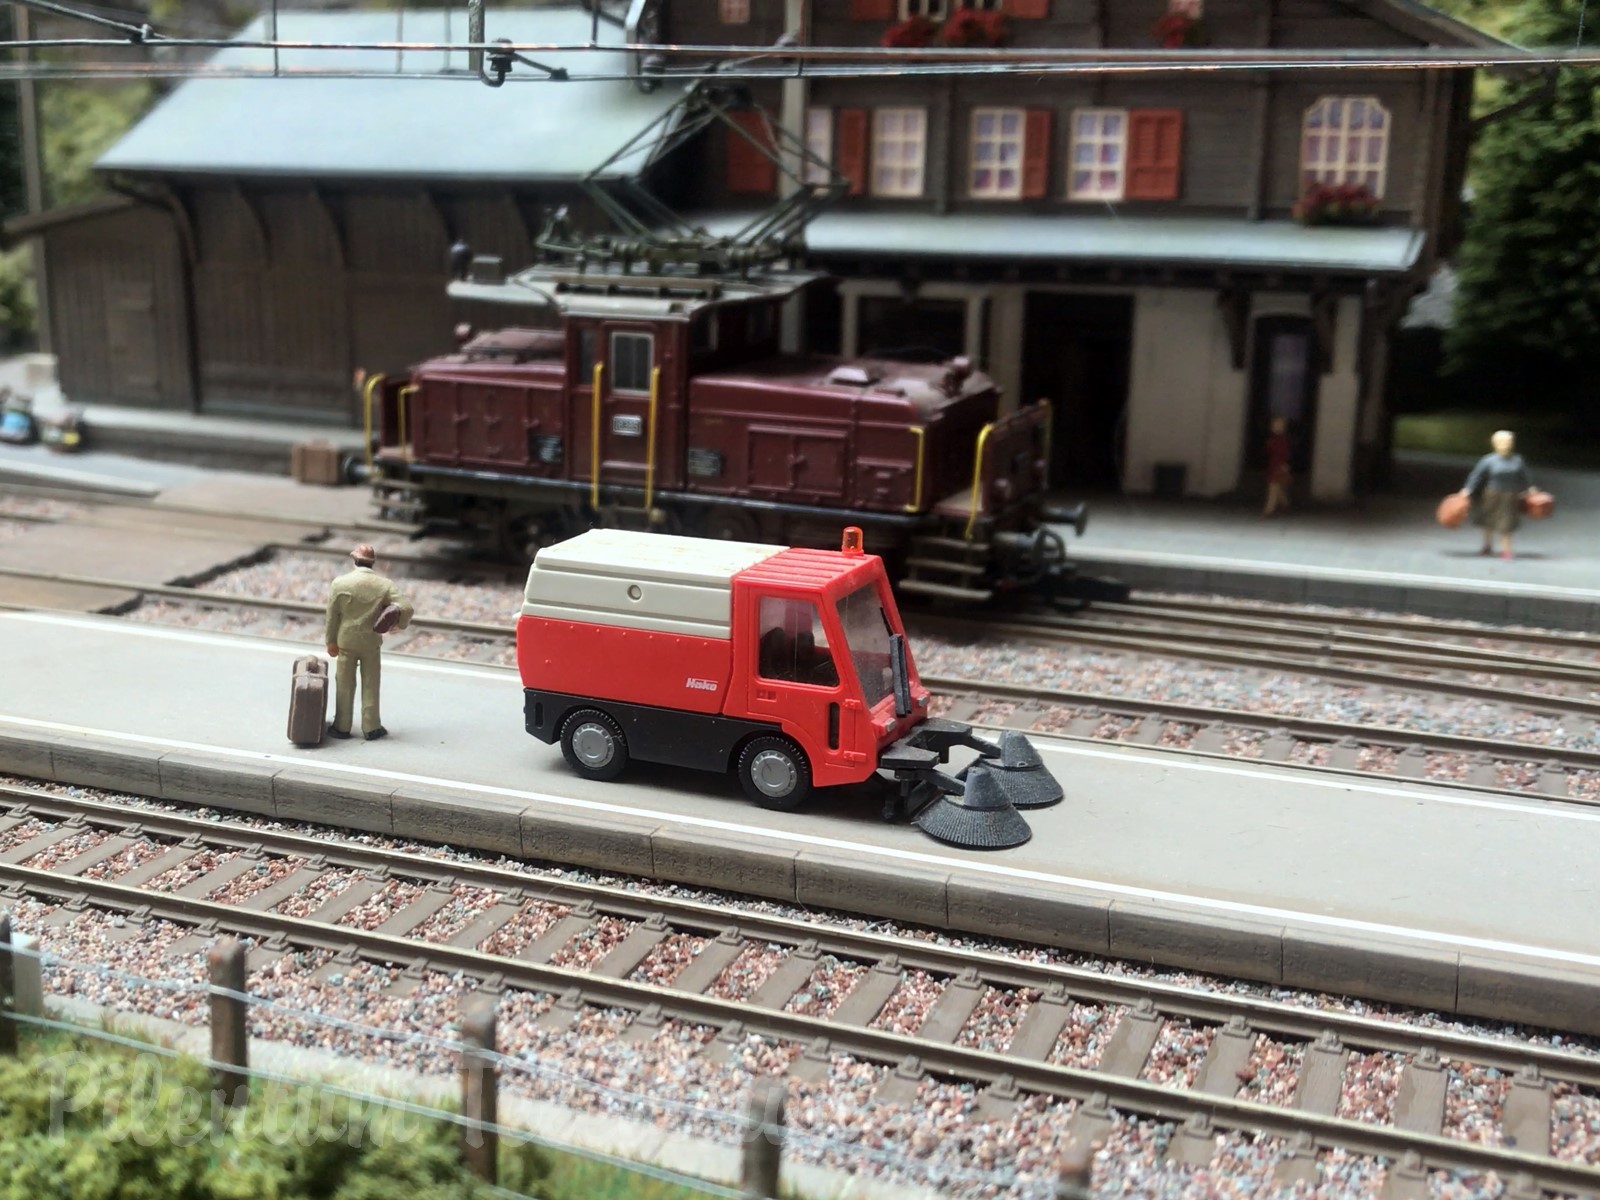 HO scale model trains in Switzerland: Brian Rodham’s beautiful Swiss model railway layout